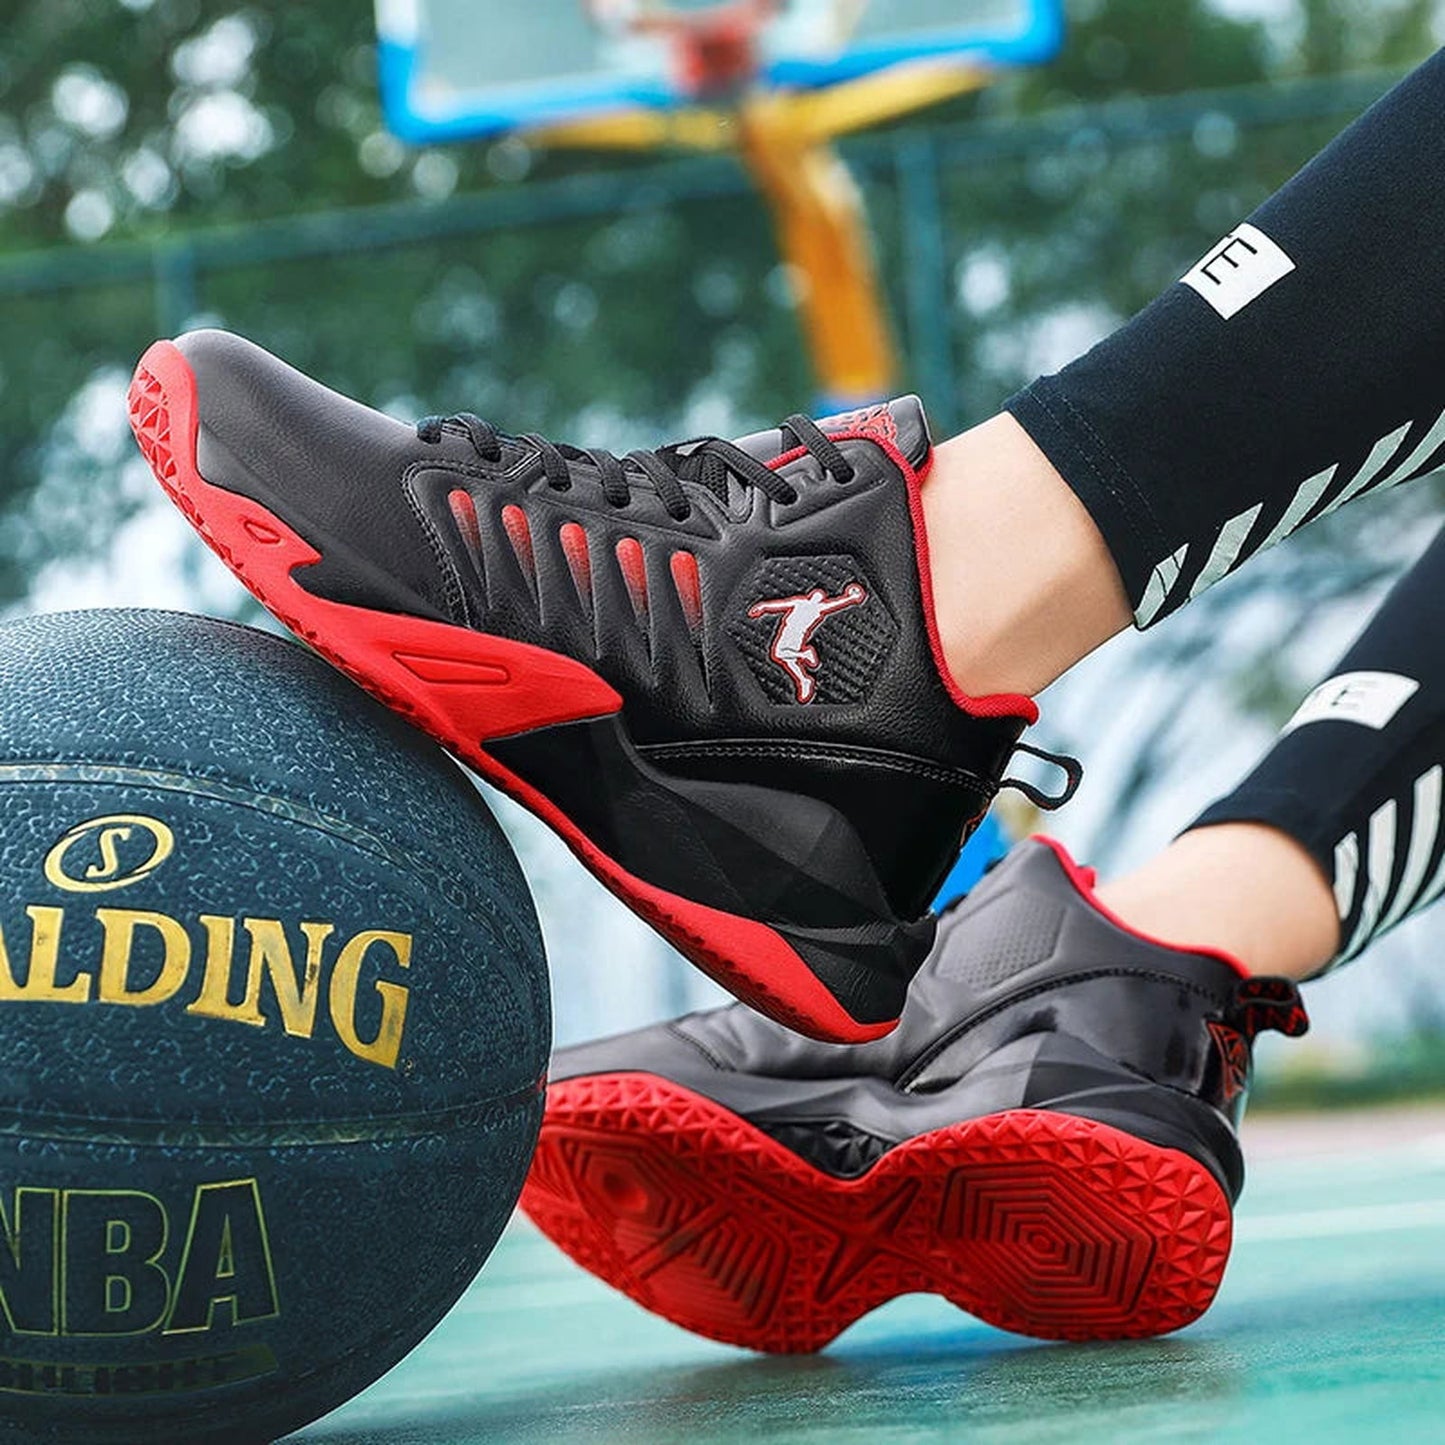 Chaussures de basket-ball respirantes et antidérapantes - Loufdingue.com - Chaussures de basket-ball respirantes et antidérapantes - Loufdingue.com -  -  